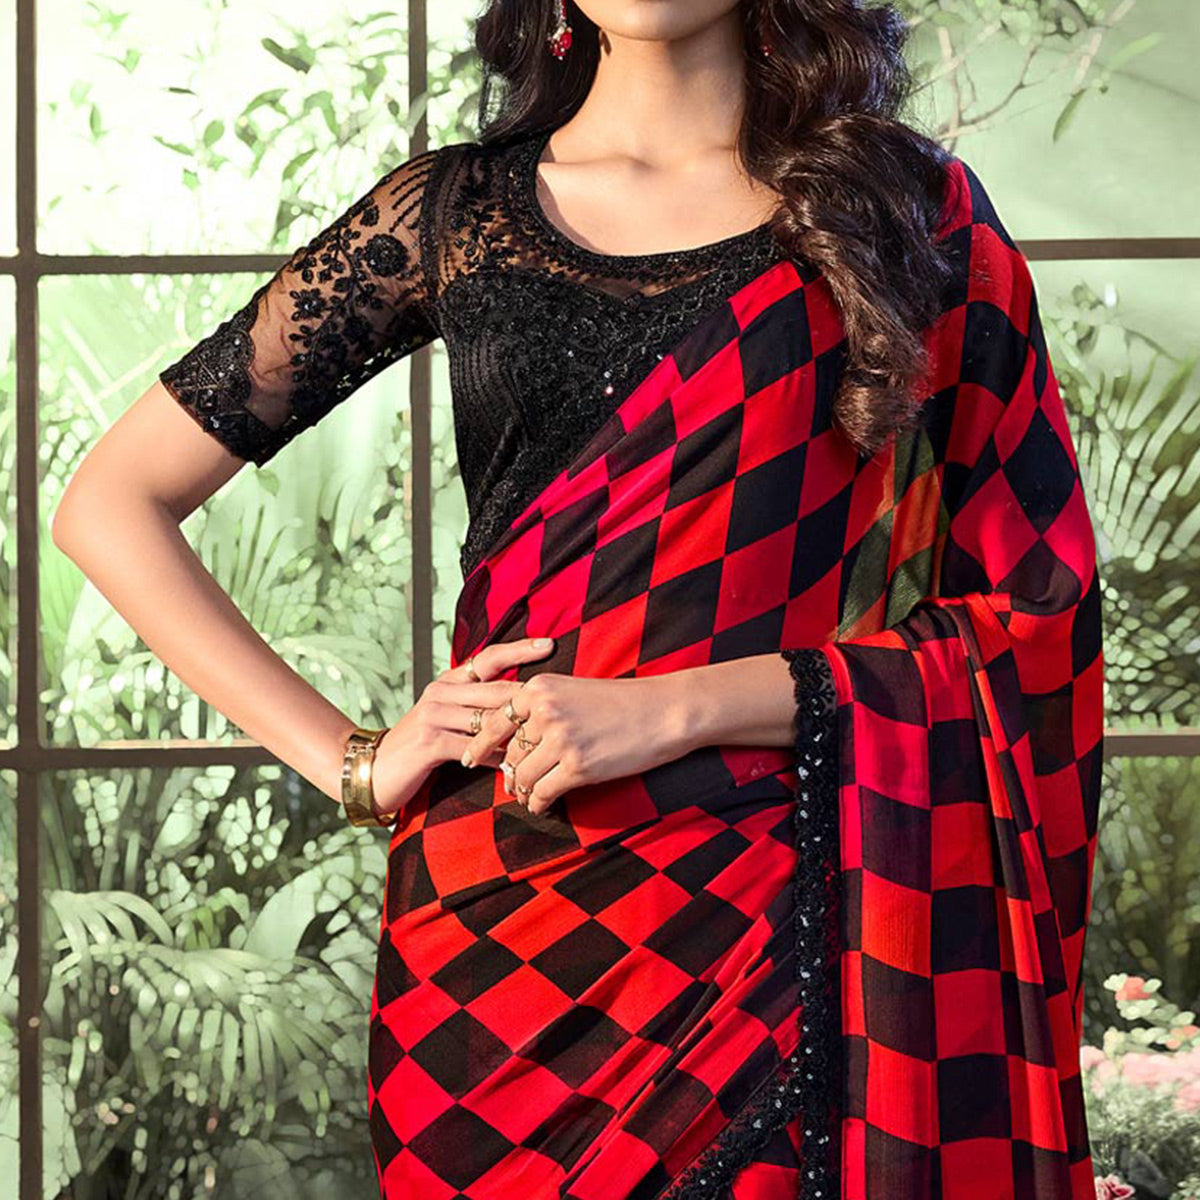 Red & Black Embroidered Chiffon Designer Saree